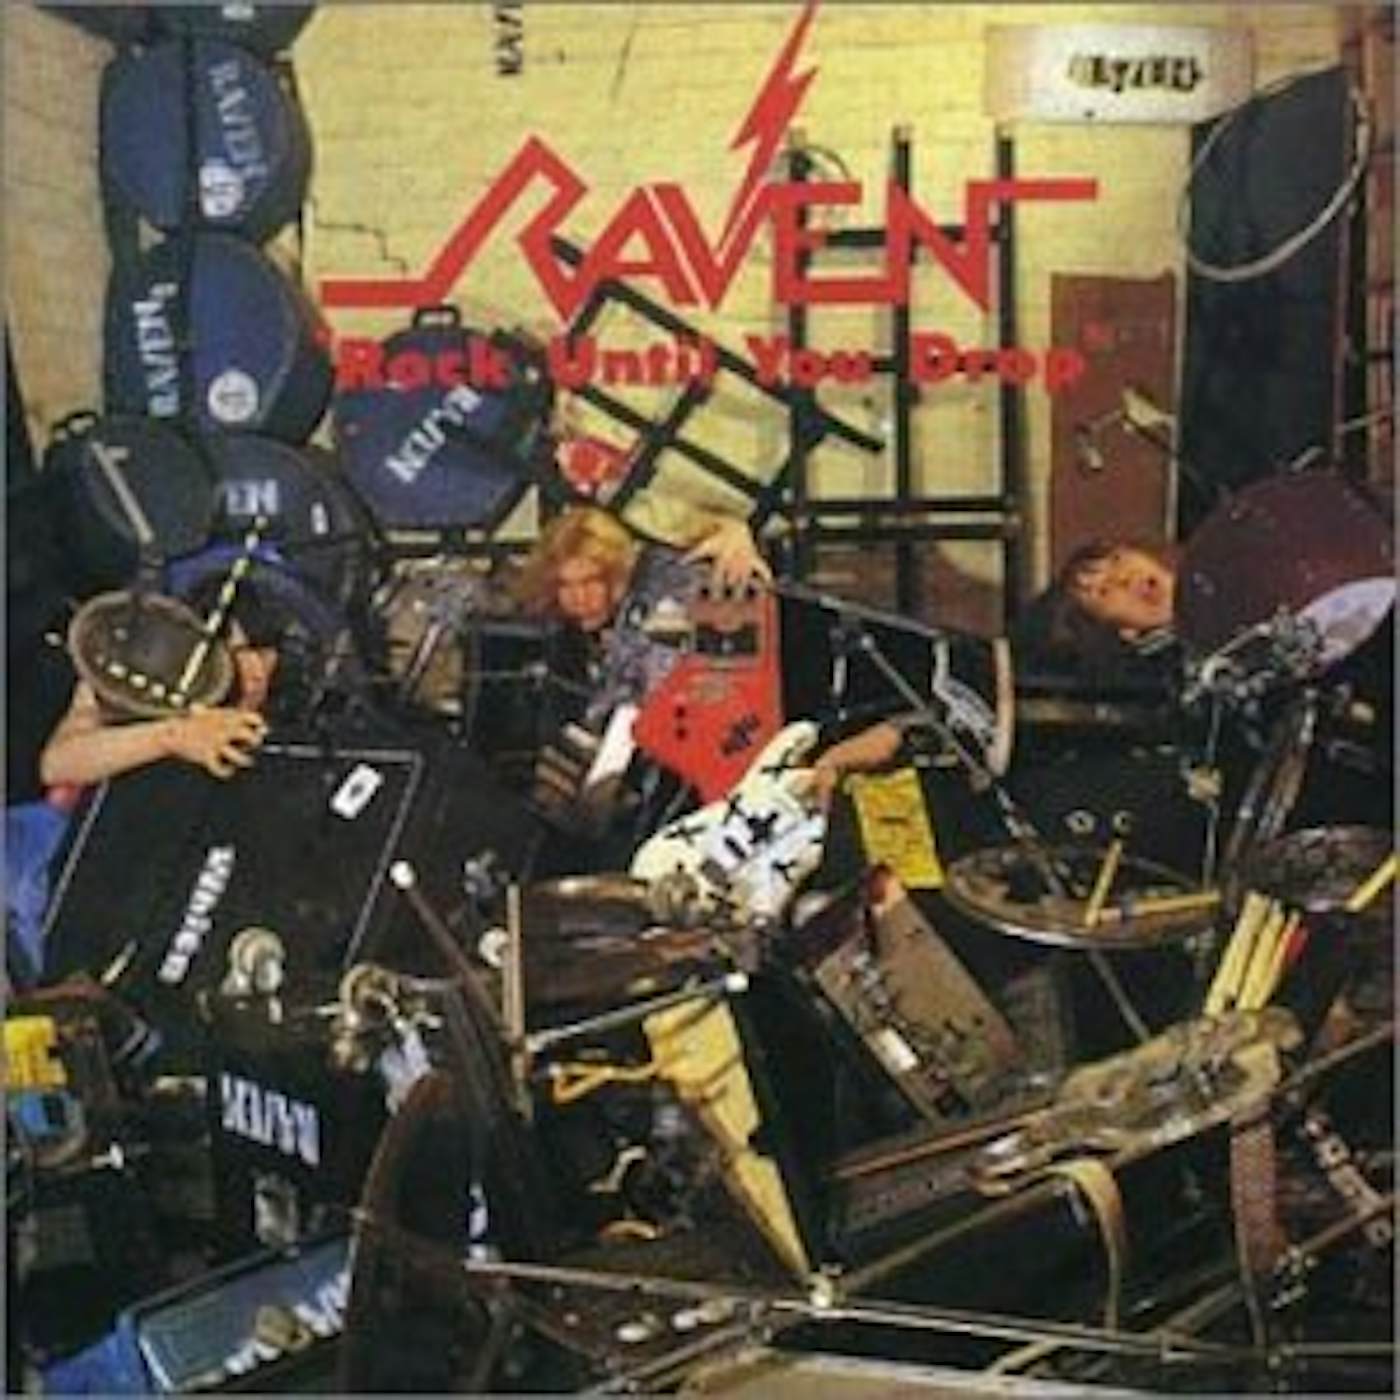 Raven Rock Until You Drop Vinyl Record